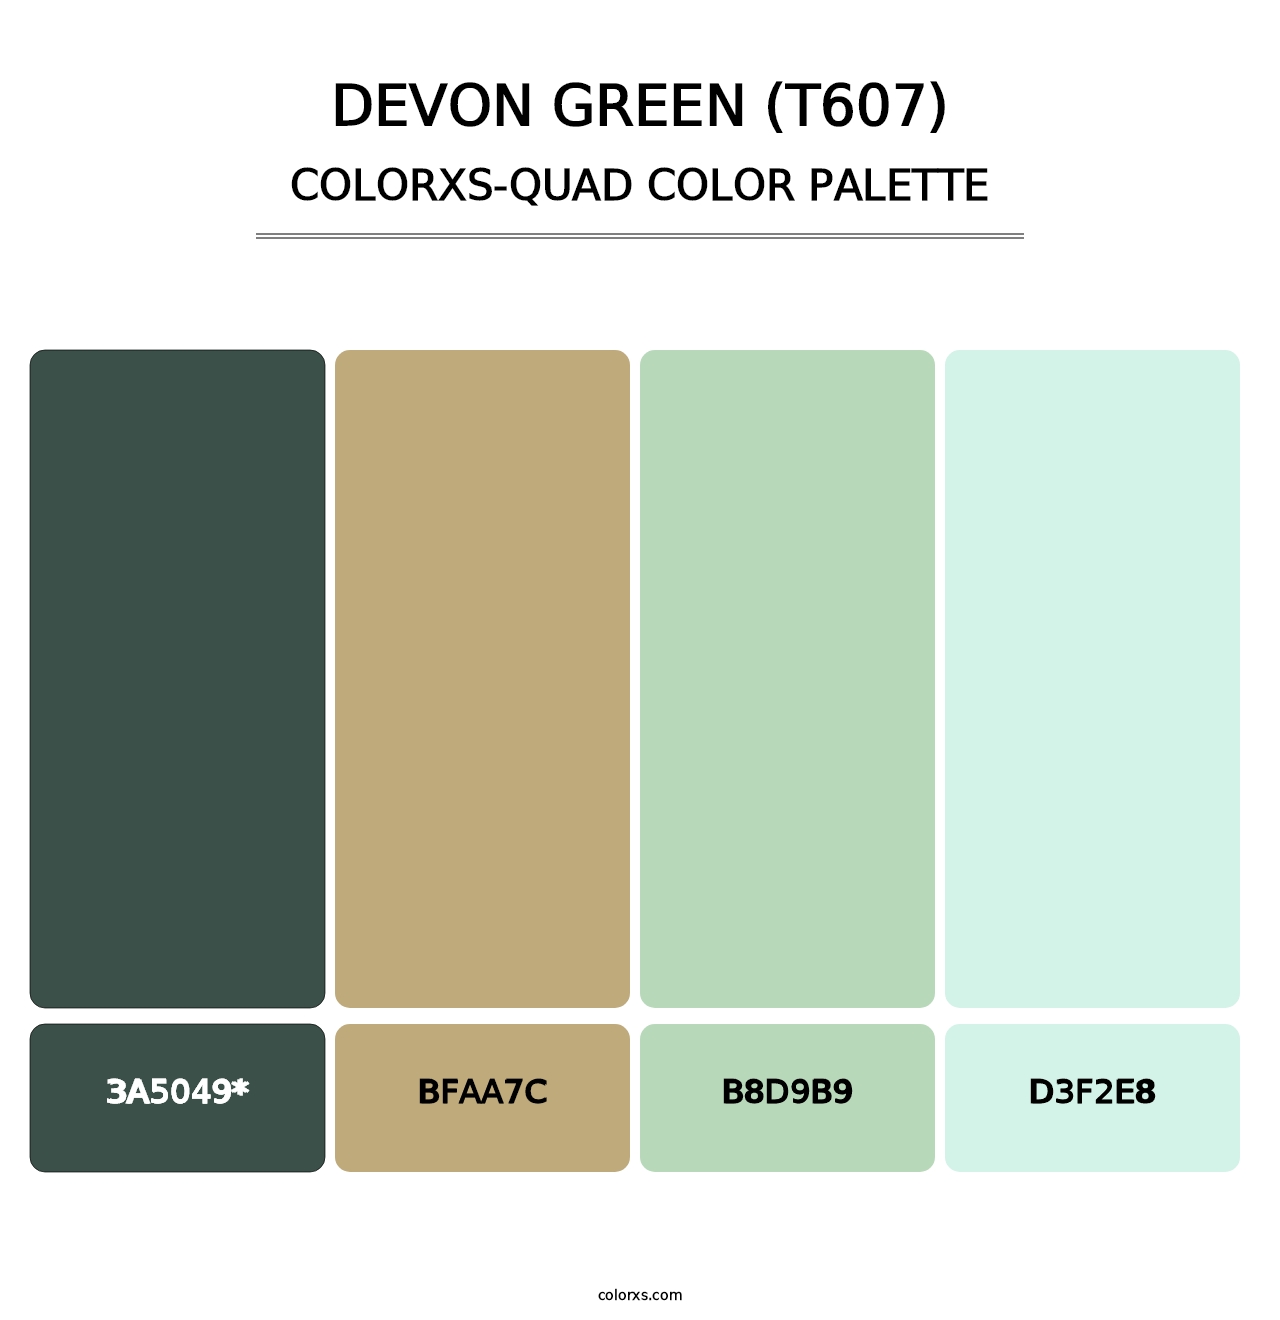 Devon Green (T607) - Colorxs Quad Palette